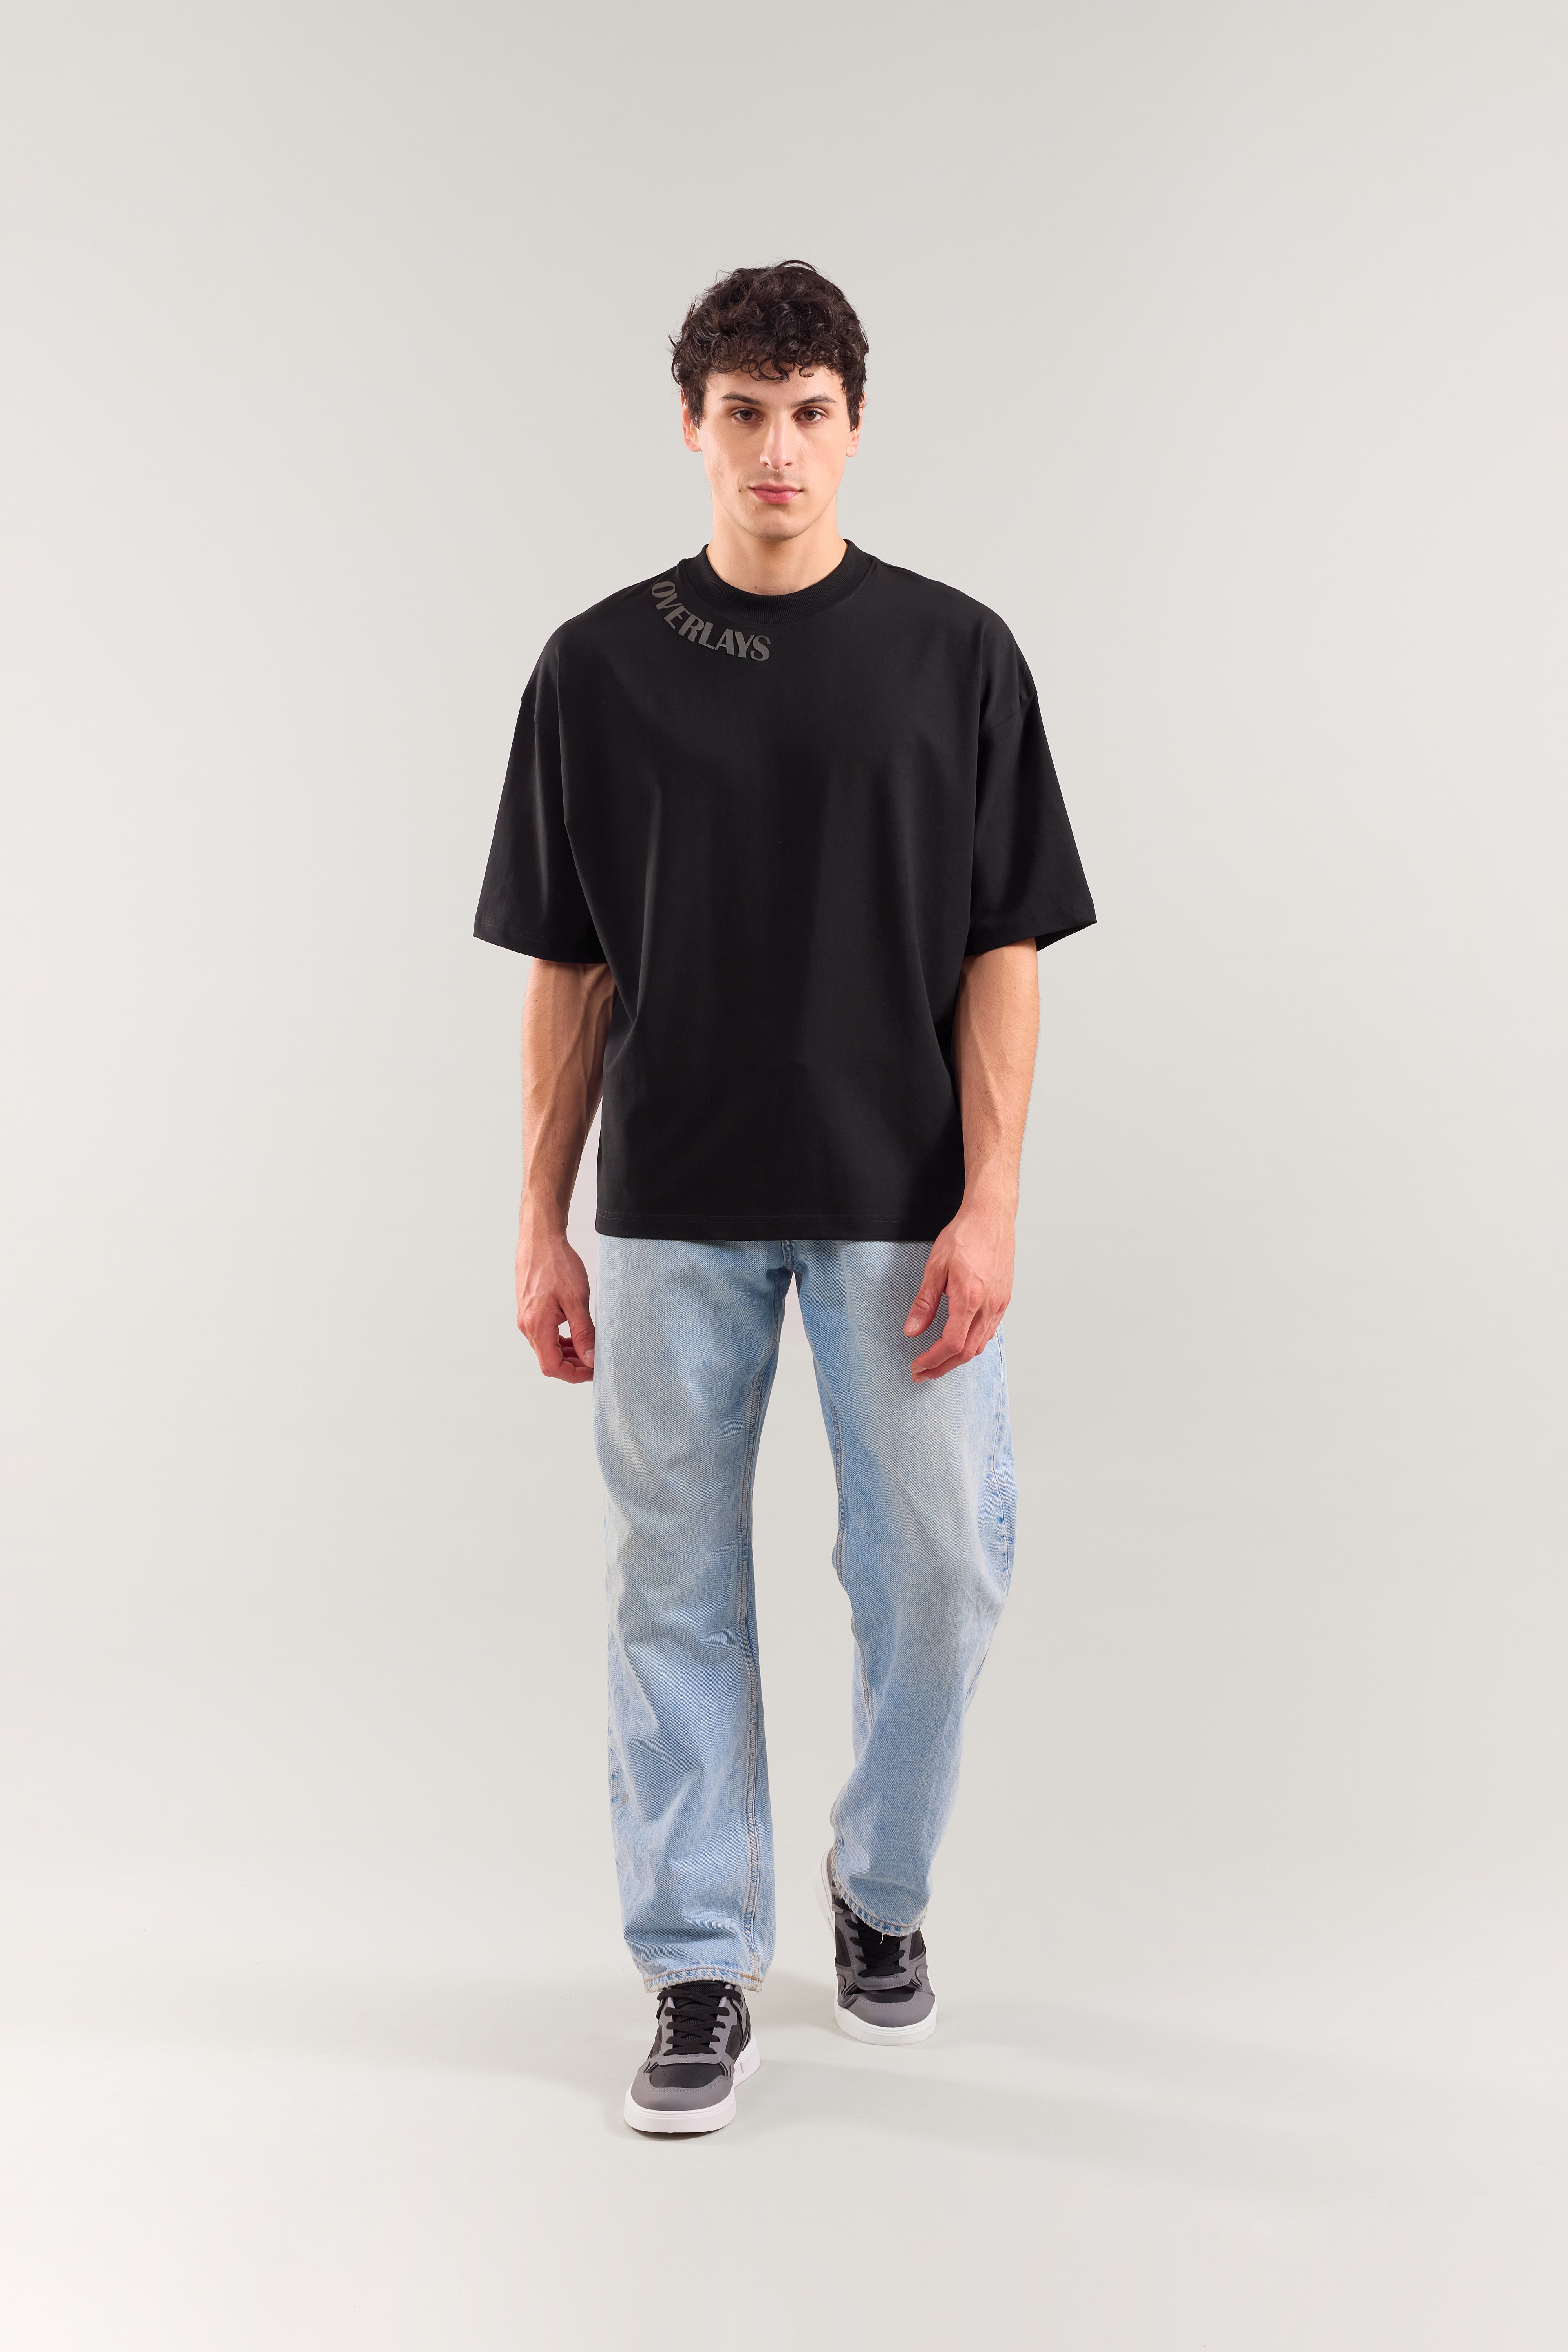 Black Evolve - Evolve Arc Oversized T-shirt - Ultra Soft